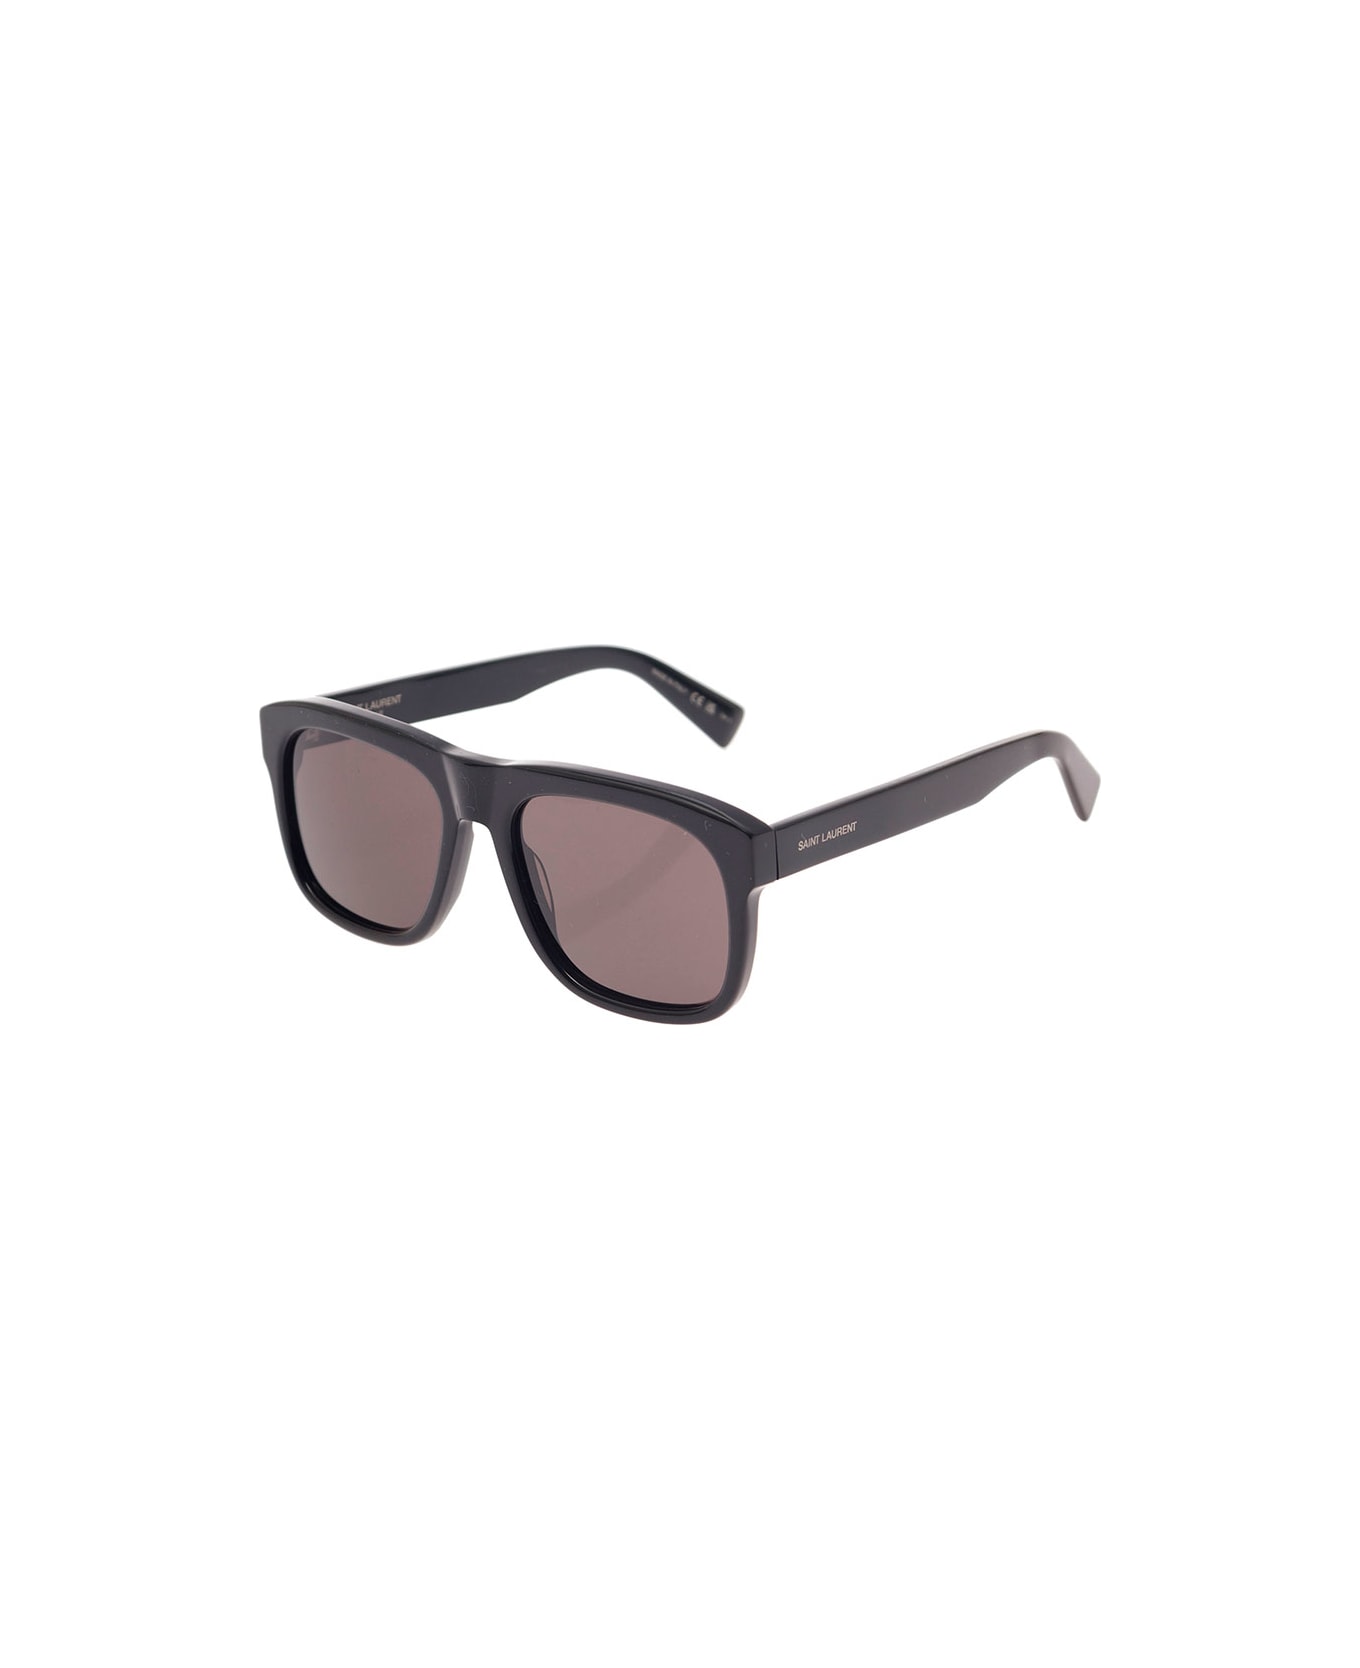 Saint Laurent 'sl 558' Black Square Sunglasses With Engraved Logo In Acetate Woman - Black アクセサリー